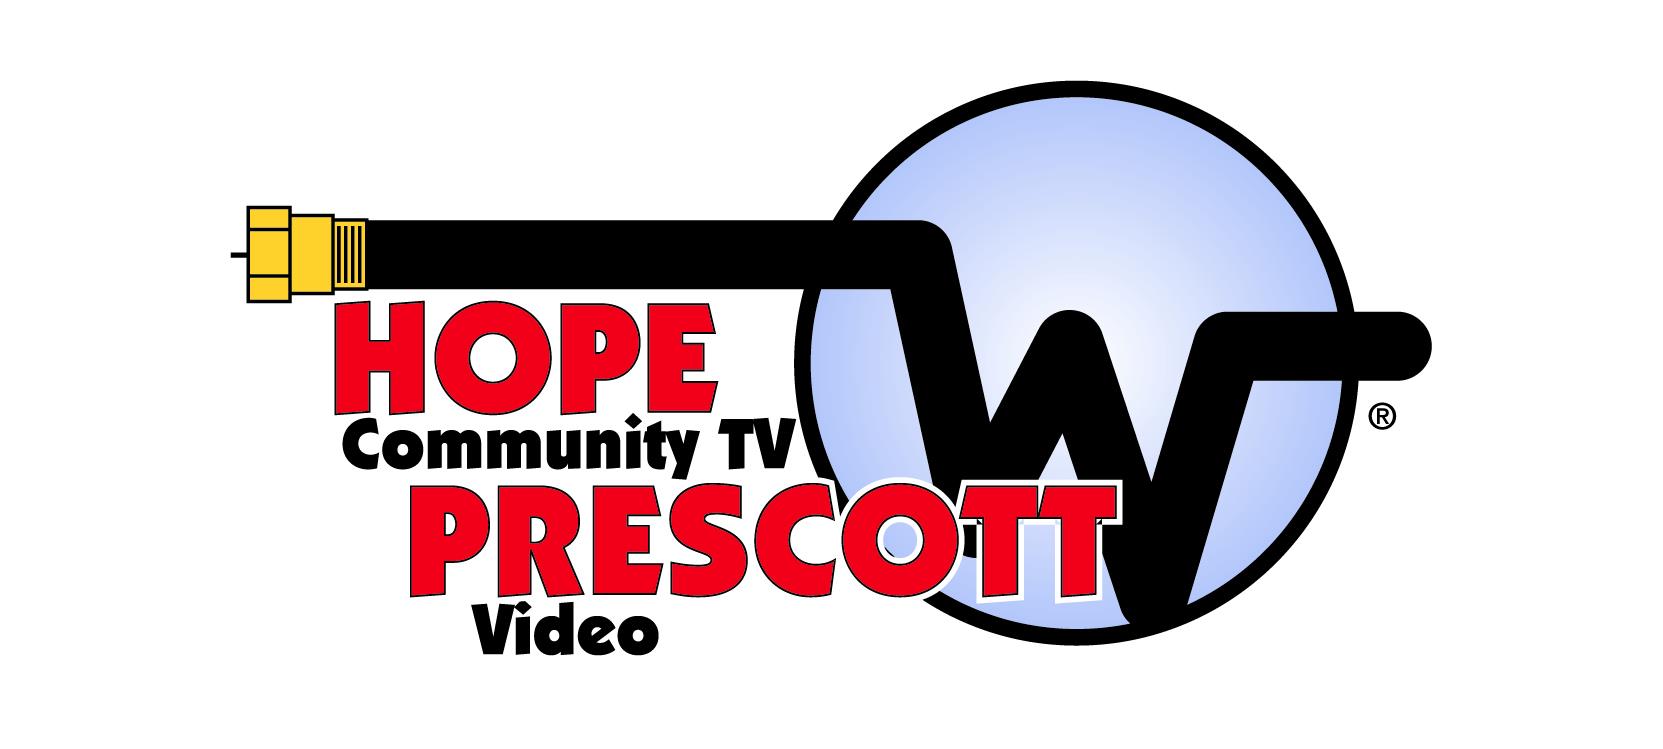 Hope Community TV & Prescott Video Logo